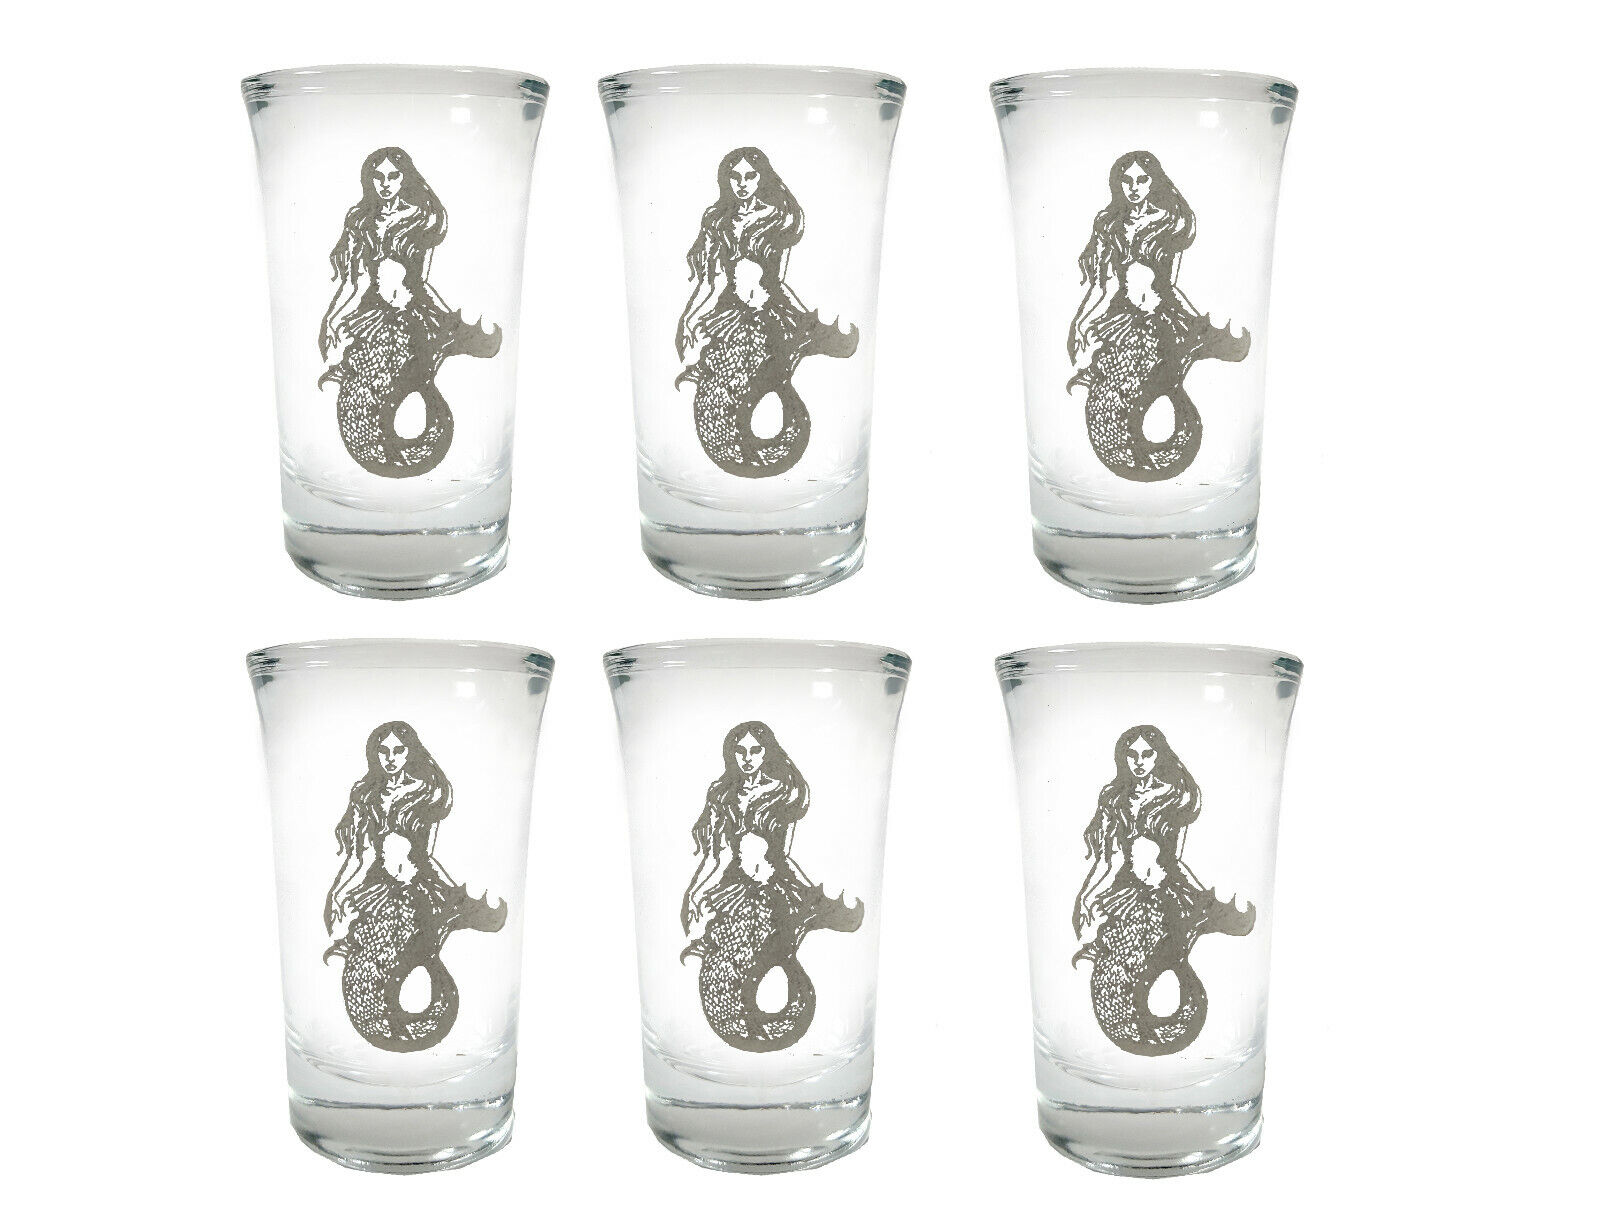 Mermaid Shot Glass Set of 6 - Free Personalized  Engraving, 1.5oz Shot Glass